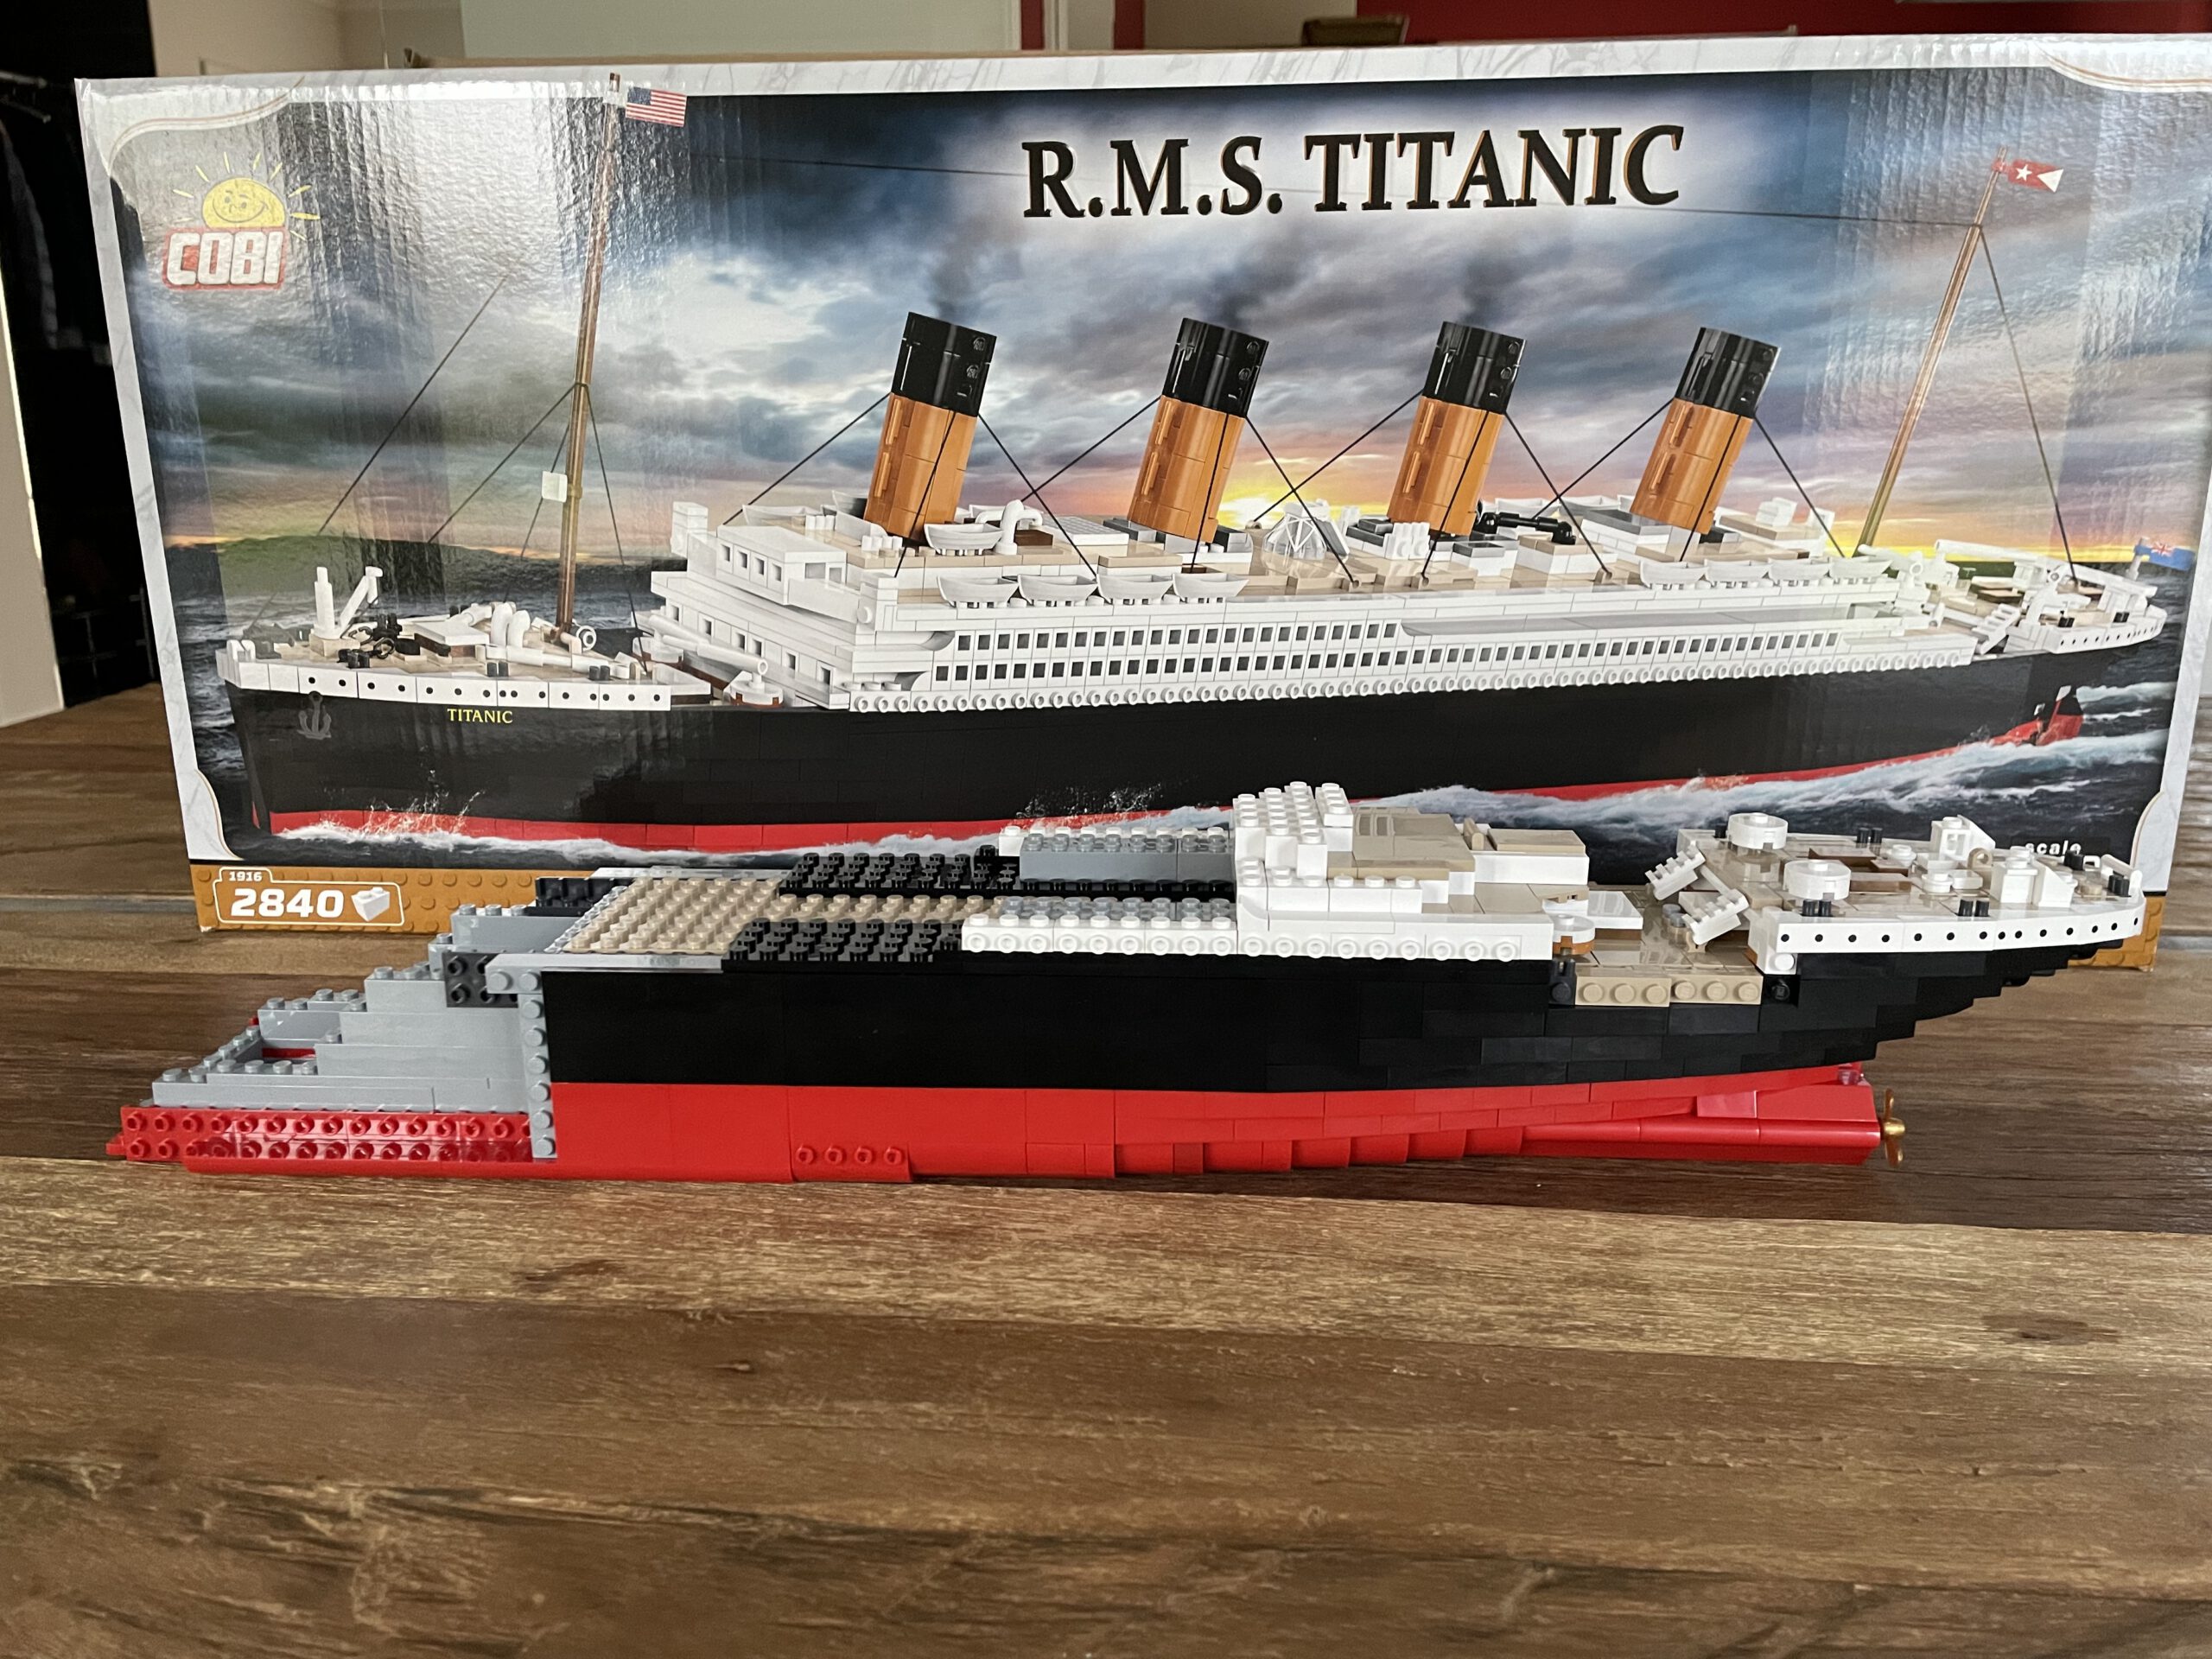 Cobi 1916 RMS Titanic